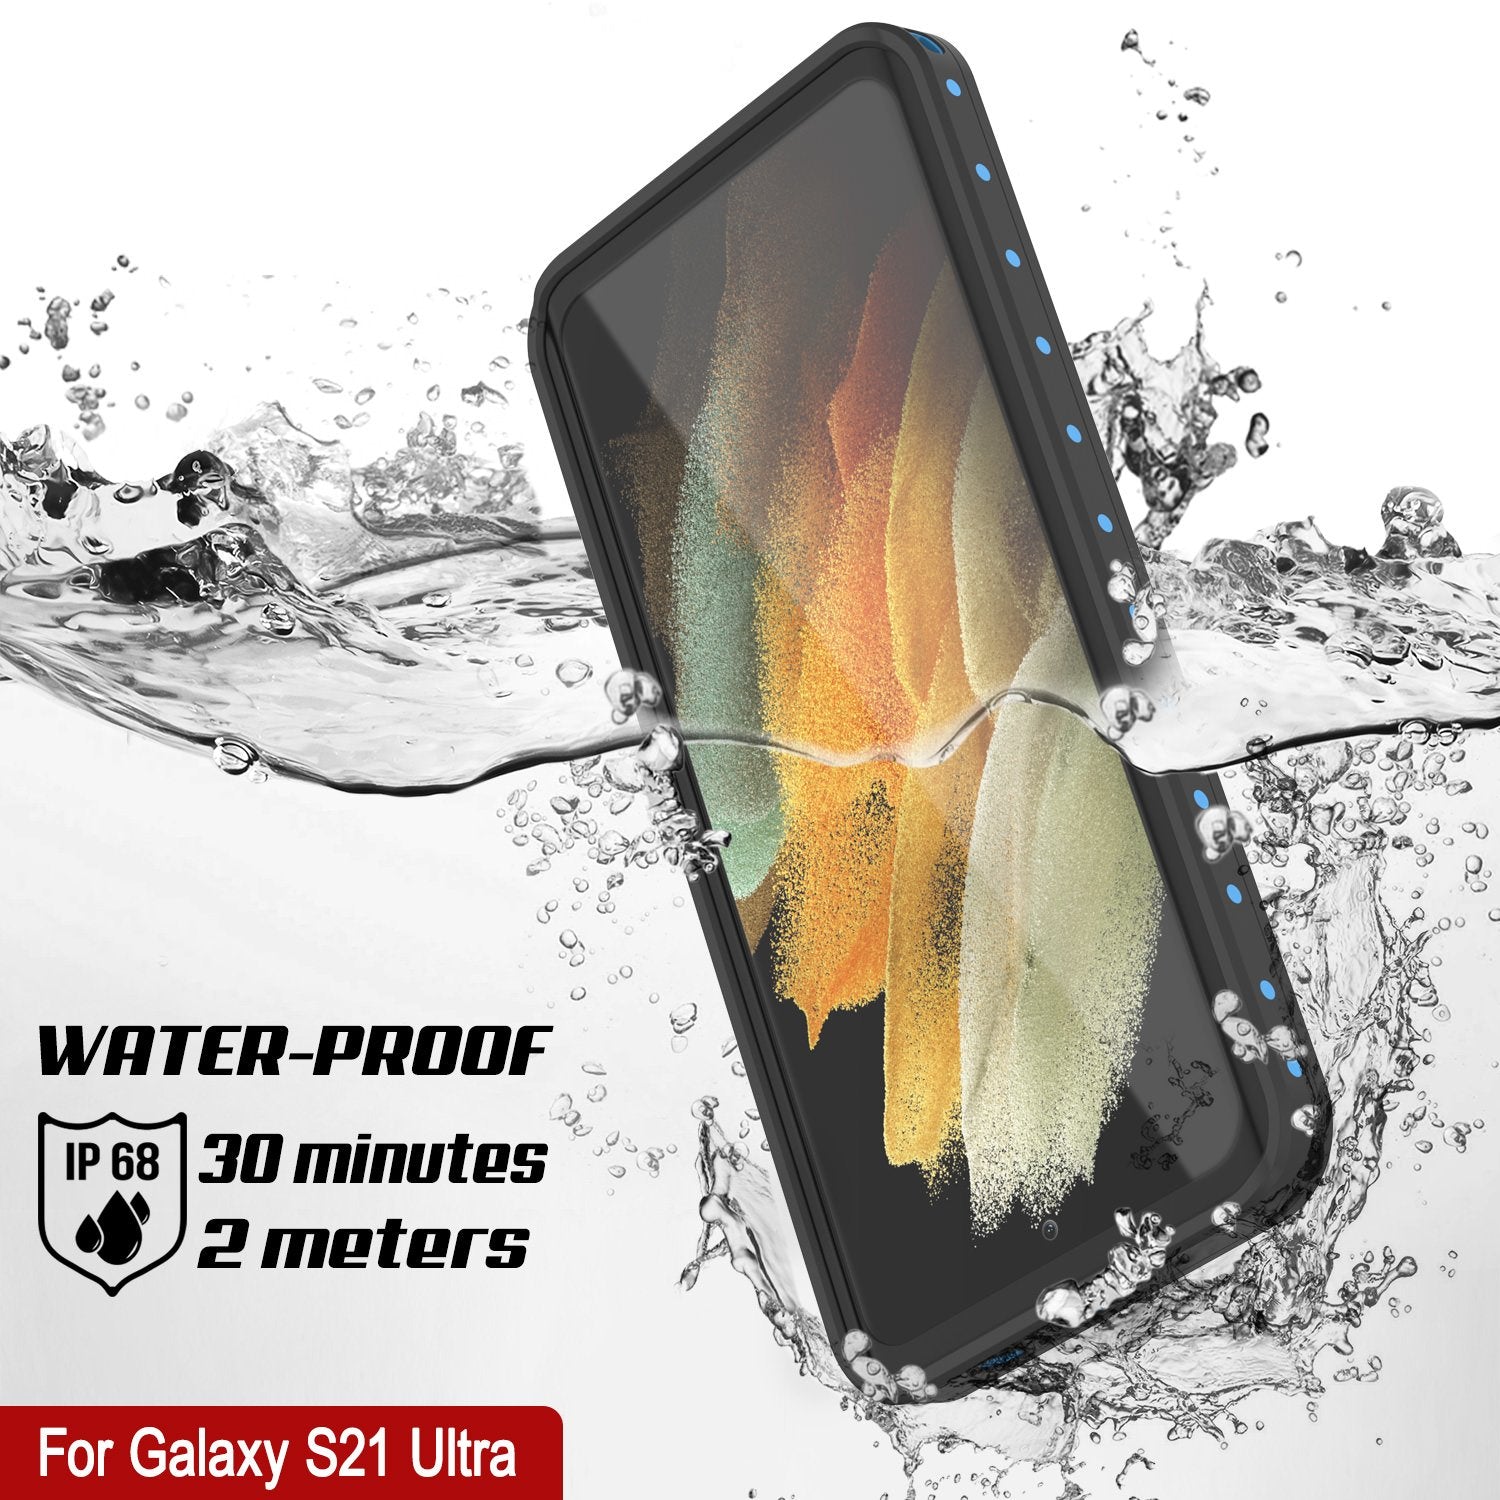 Galaxy S21 Ultra Waterproof Case PunkCase StudStar Light Blue Thin 6.6ft Underwater IP68 ShockProof